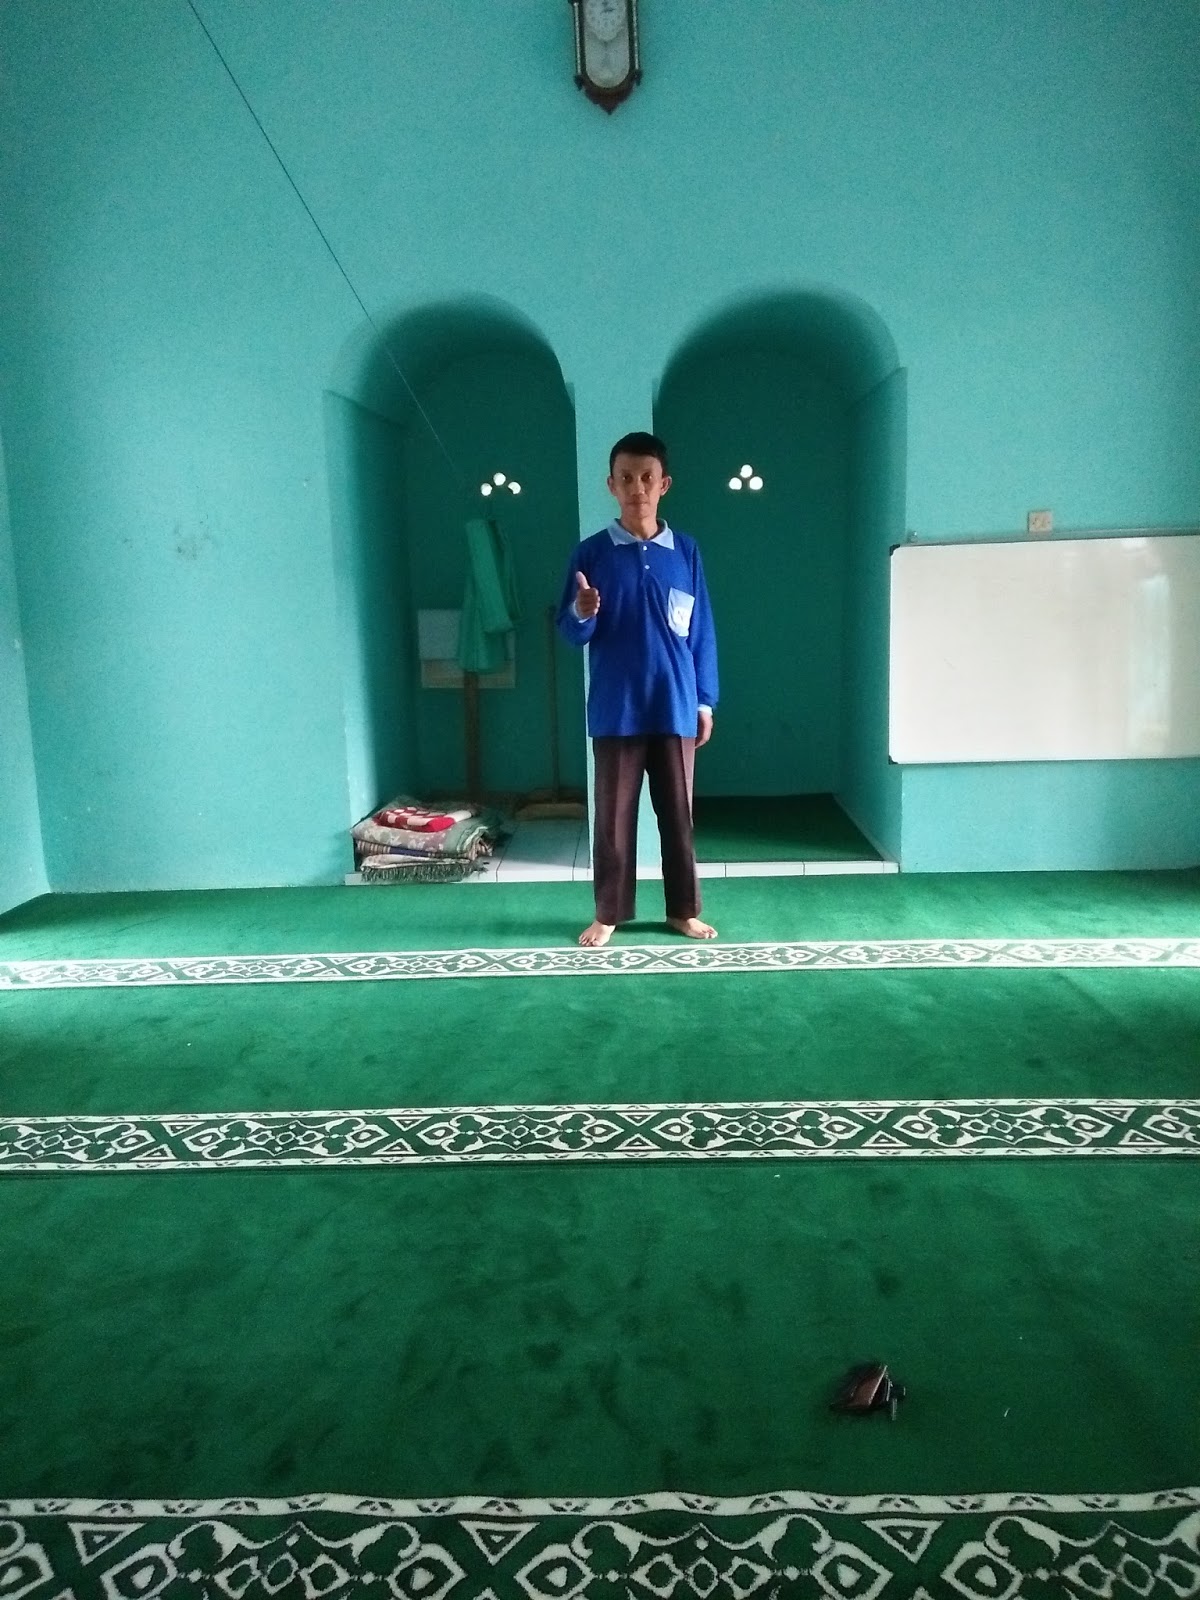  Harga Karpet Lantai di Malang 